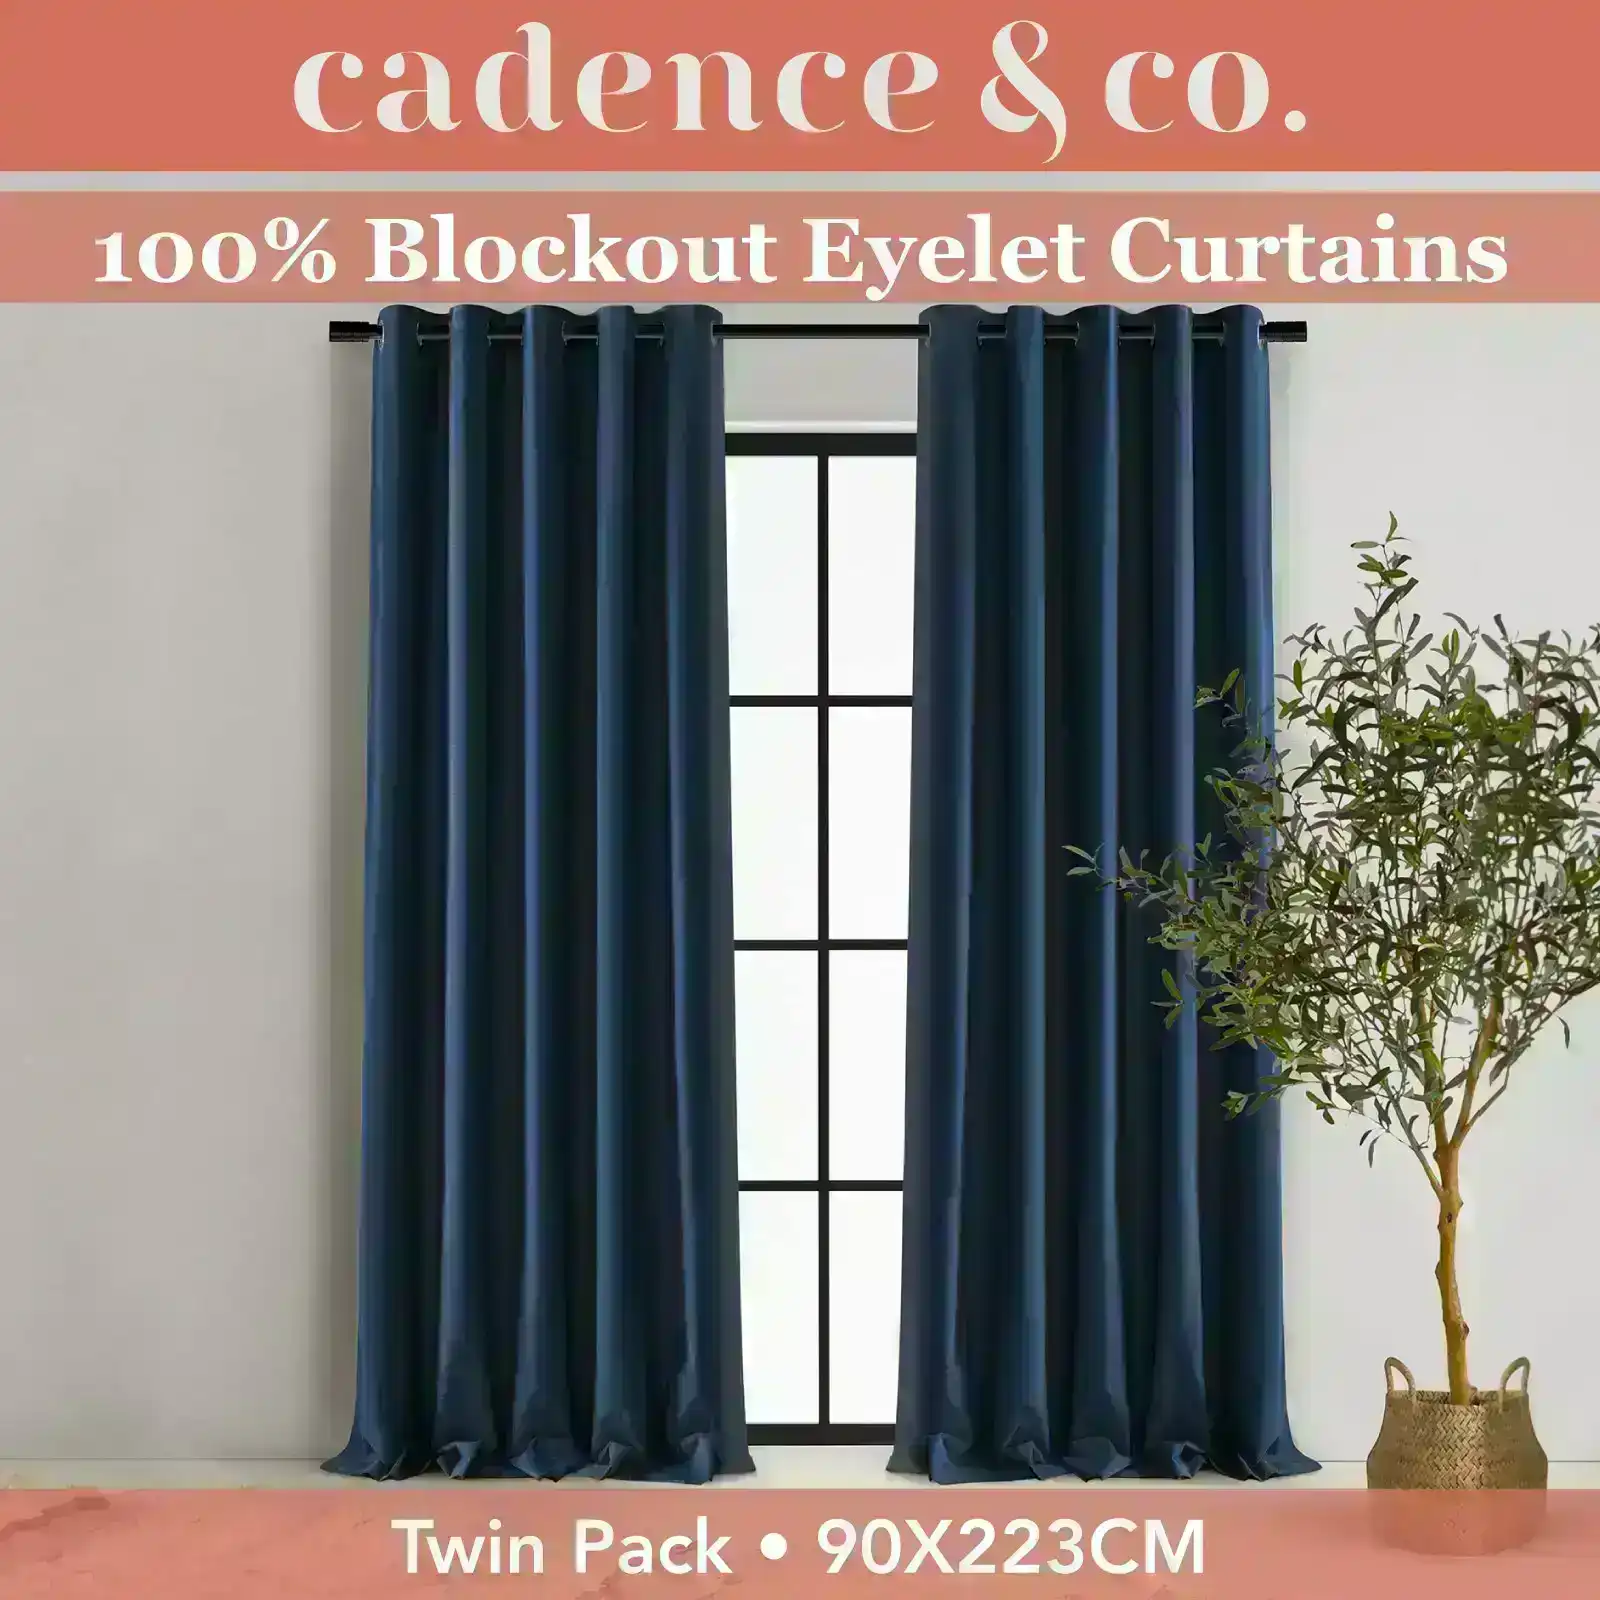 Cadence & Co Byron Matte Velvet 100% Blockout Eyelet Curtains Twin Pack Navy Blue 90x223cm